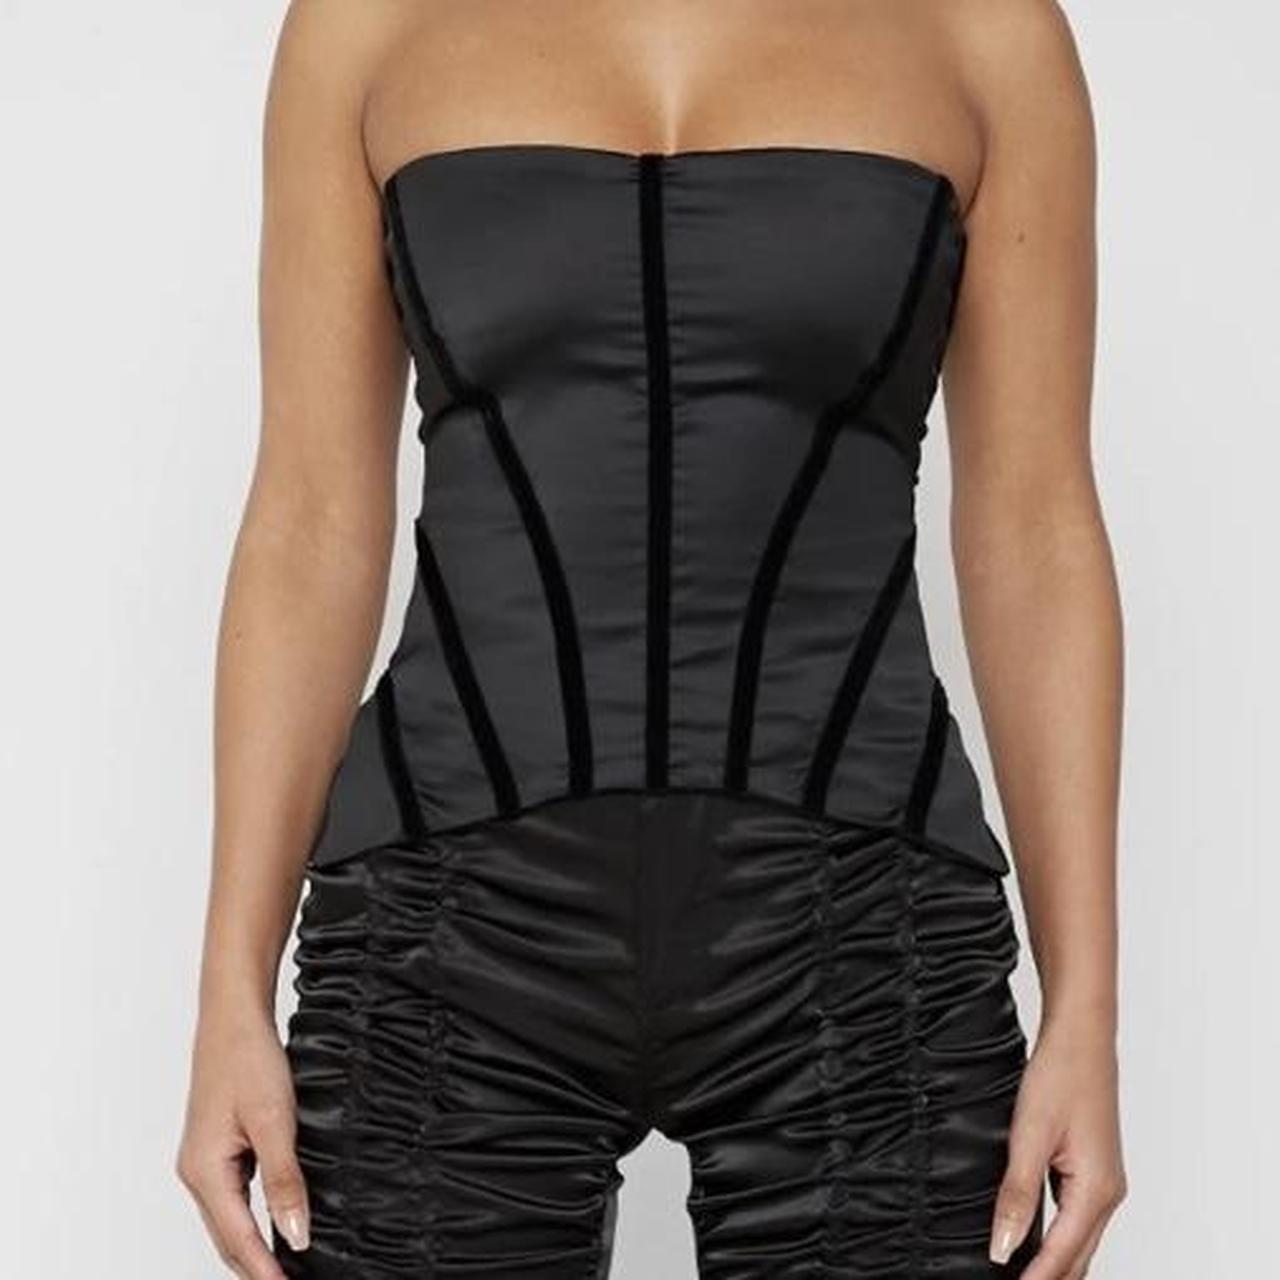 Maniere devoir black satin bustier corset top Size... - Depop